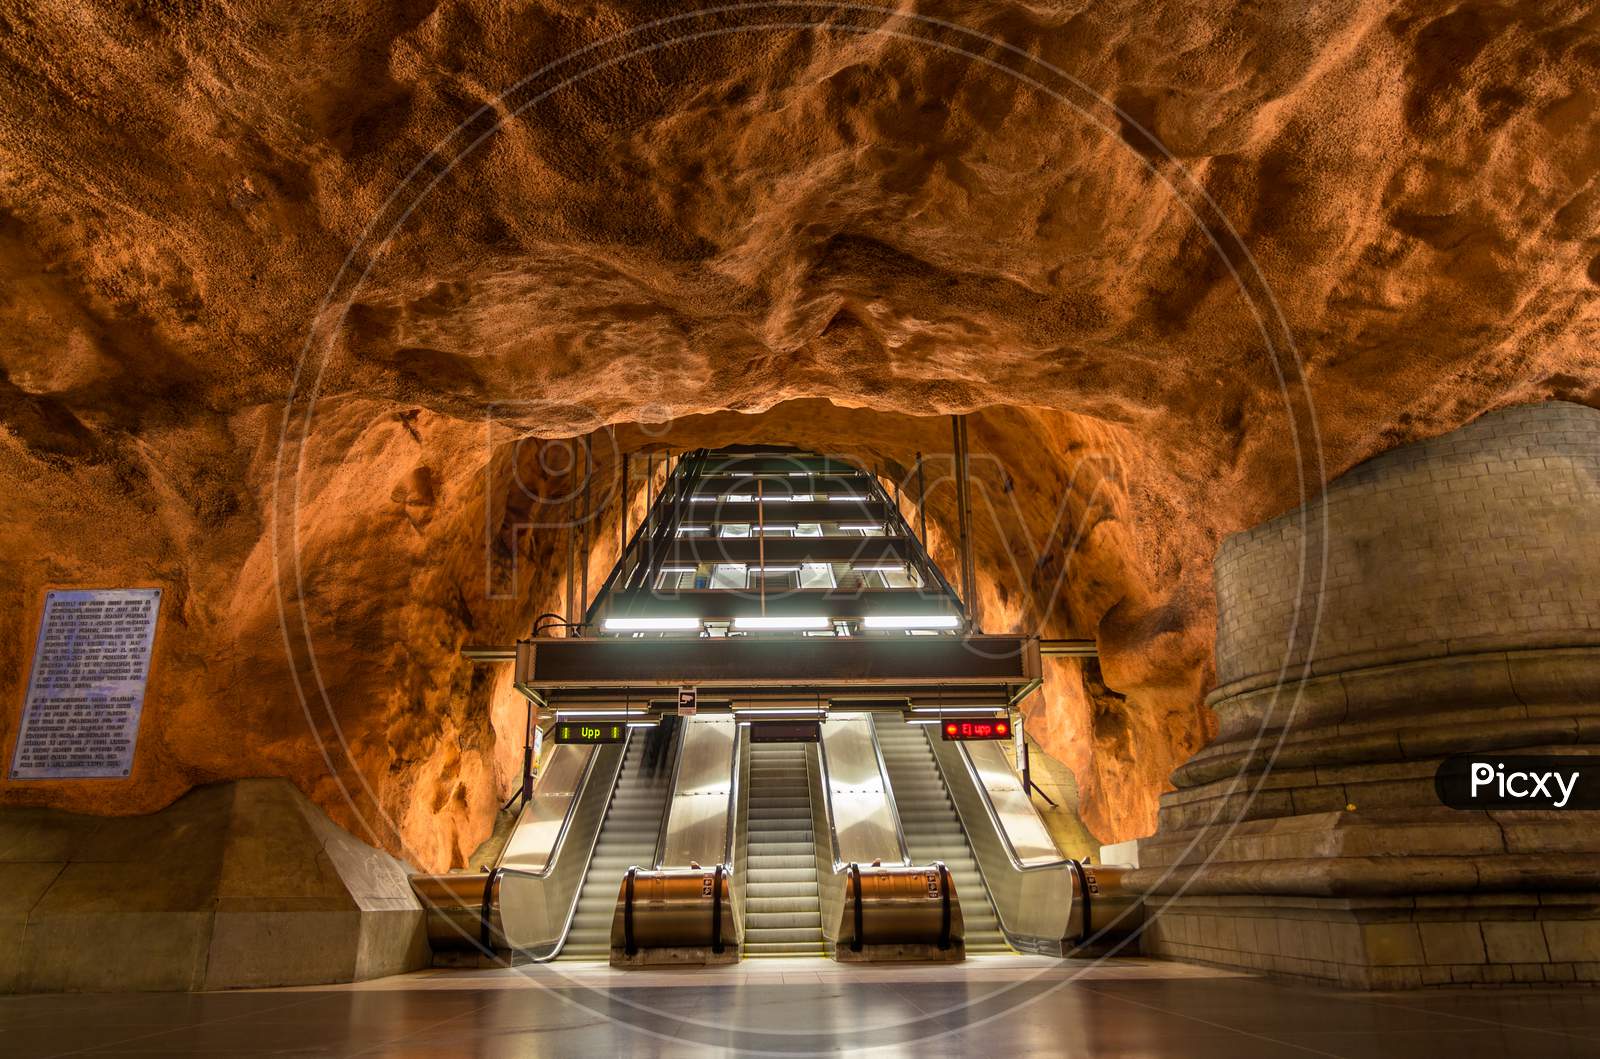 Interior Of Radhuset Station, Stockholm Metro